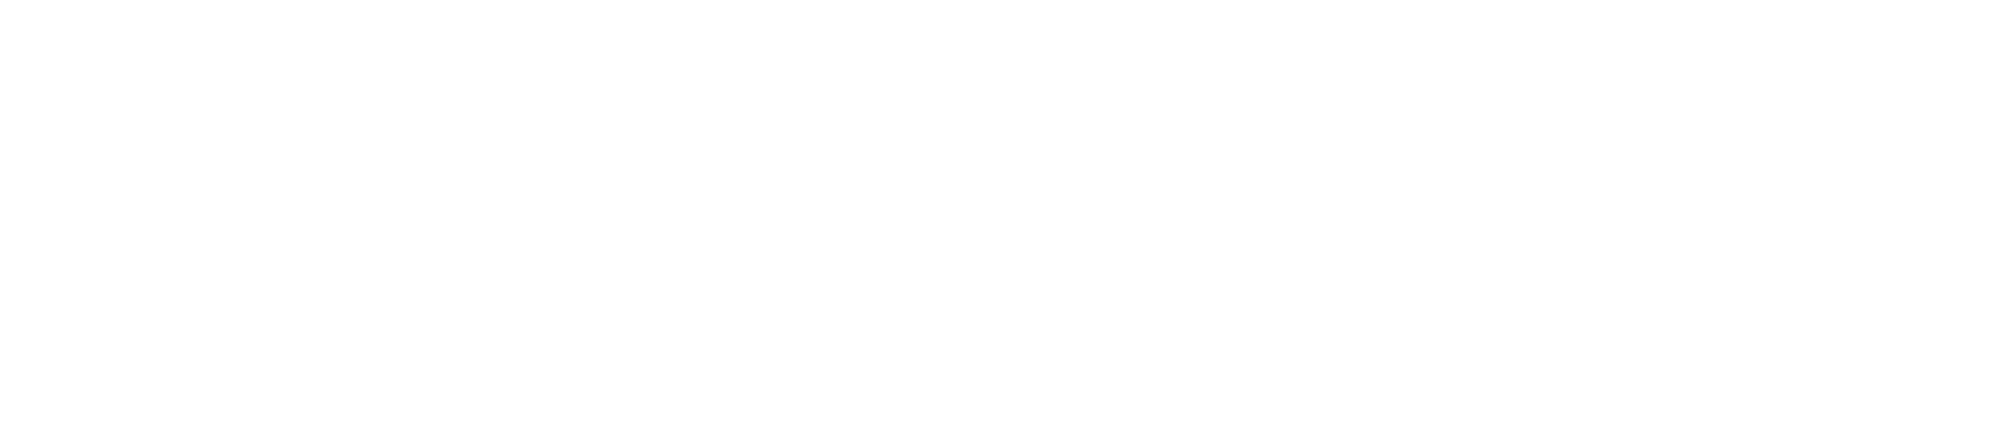 Göge Stuckgeschäft GmbH & Co. KG